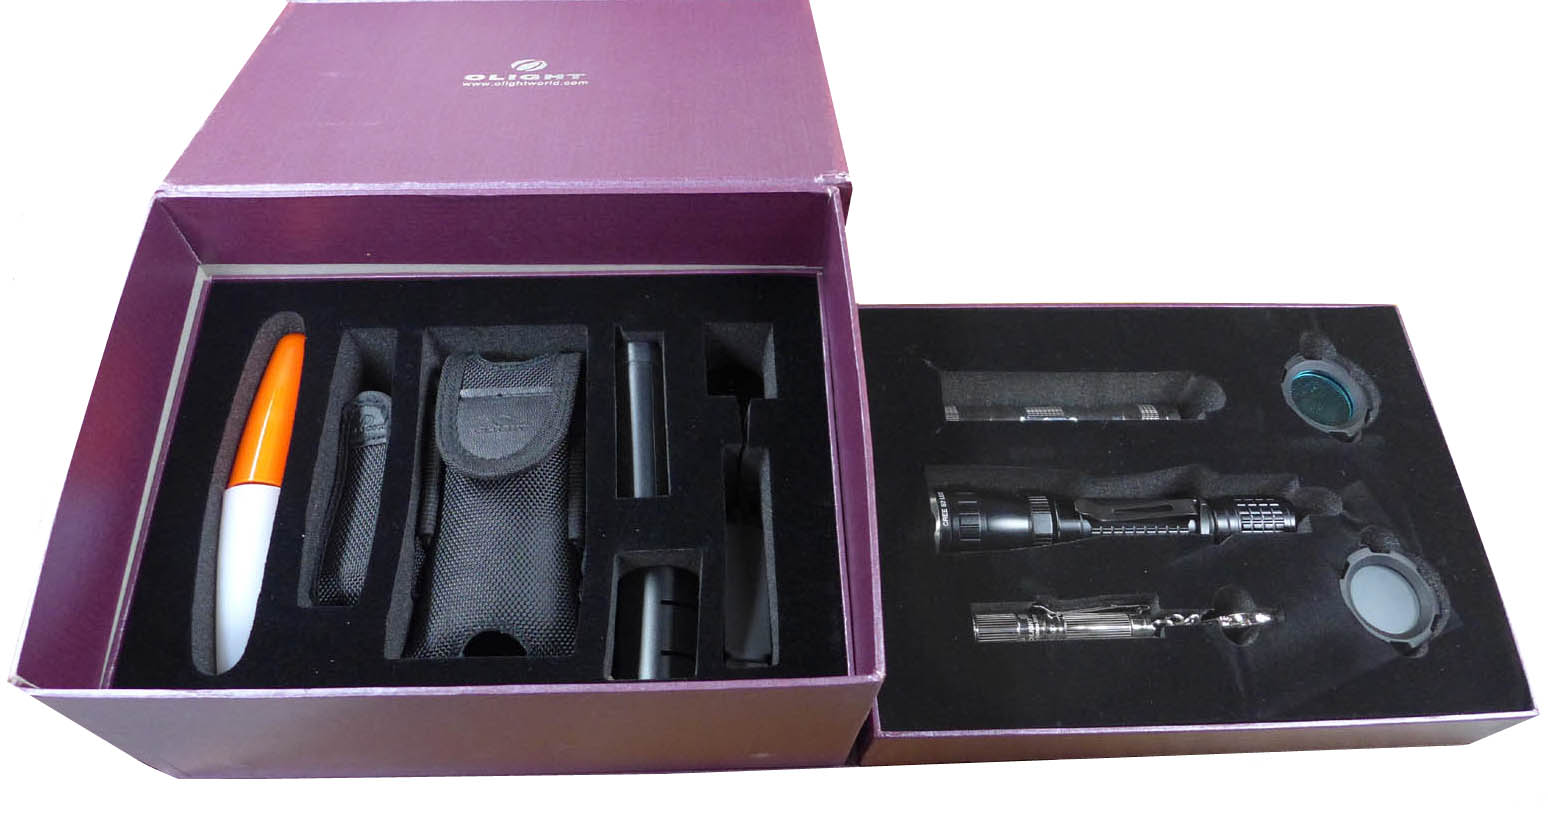 Olight Gift Box Set - 3 flashlights + accessories